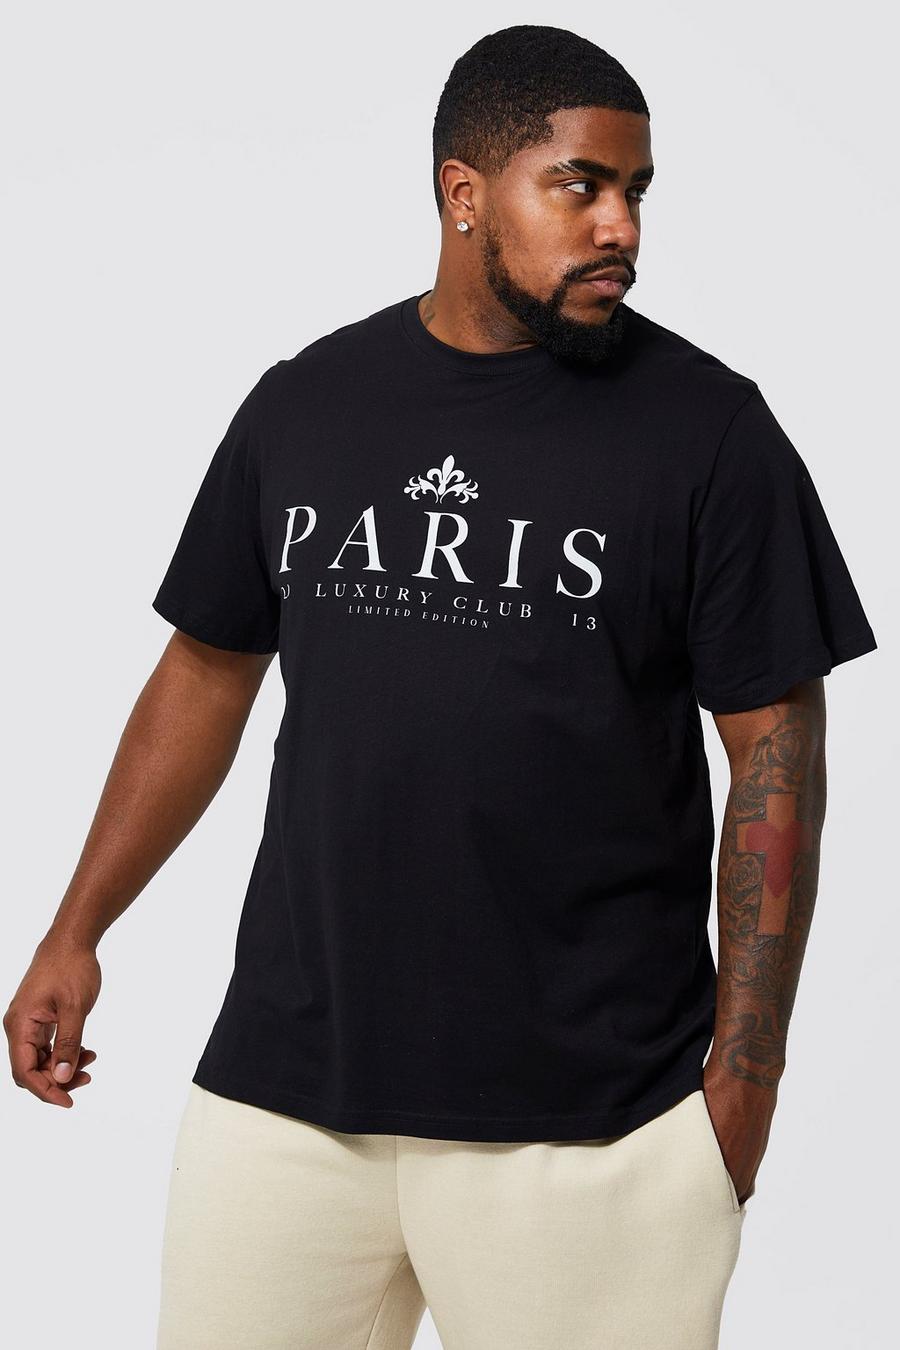 Plus T-Shirt mit Paris Club Print, Black schwarz